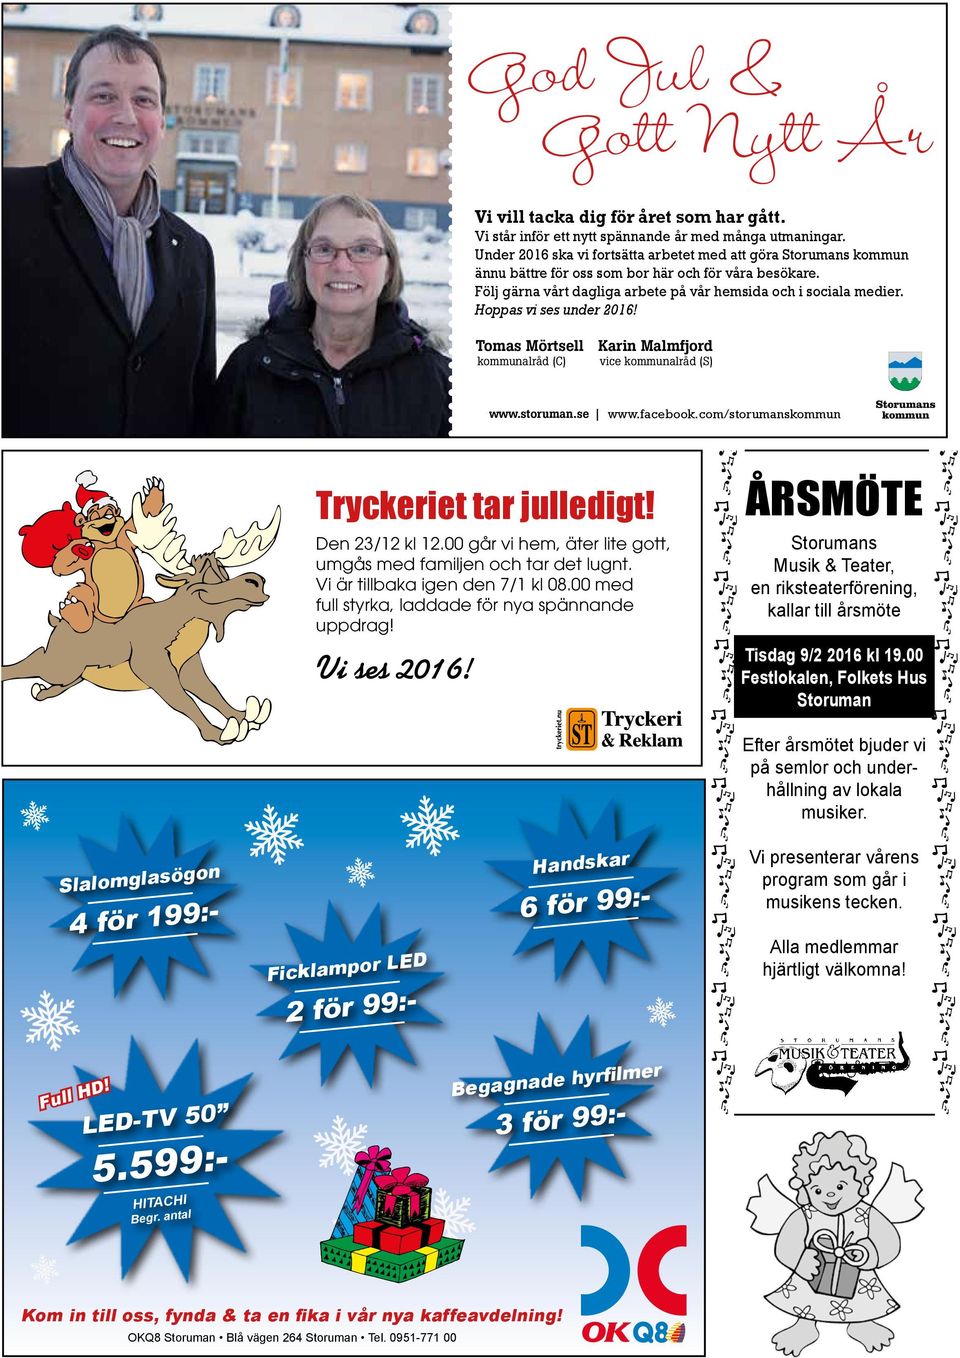 Hoppas vi ses under 2016! Tomas Mörtsell Karin Malmfjord kommunalråd (C) vice kommunalråd (S) www.storuman.se info@storuman.se 0951-140 00 vxl www.facebook.